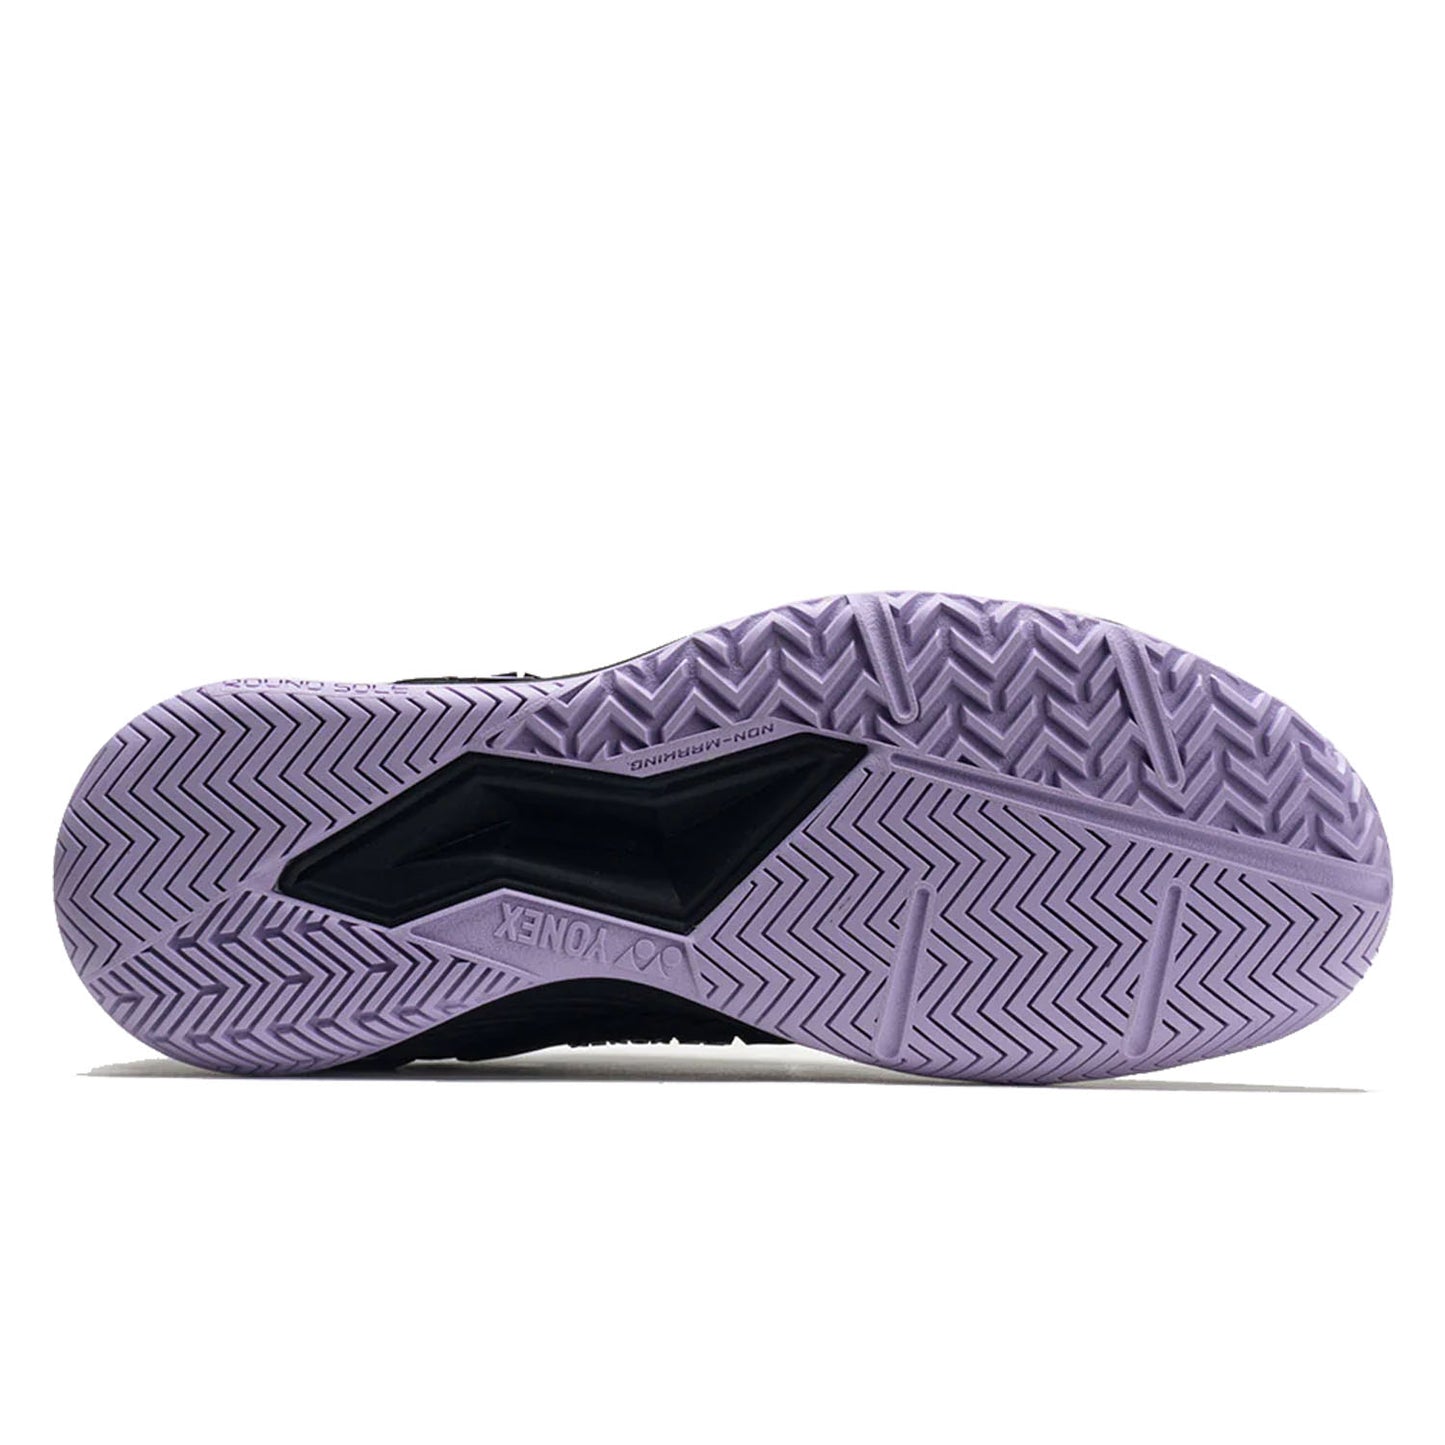 Yonex Power Cushion Eclipsion 4 Tennis Shoe - Best Price online Prokicksports.com